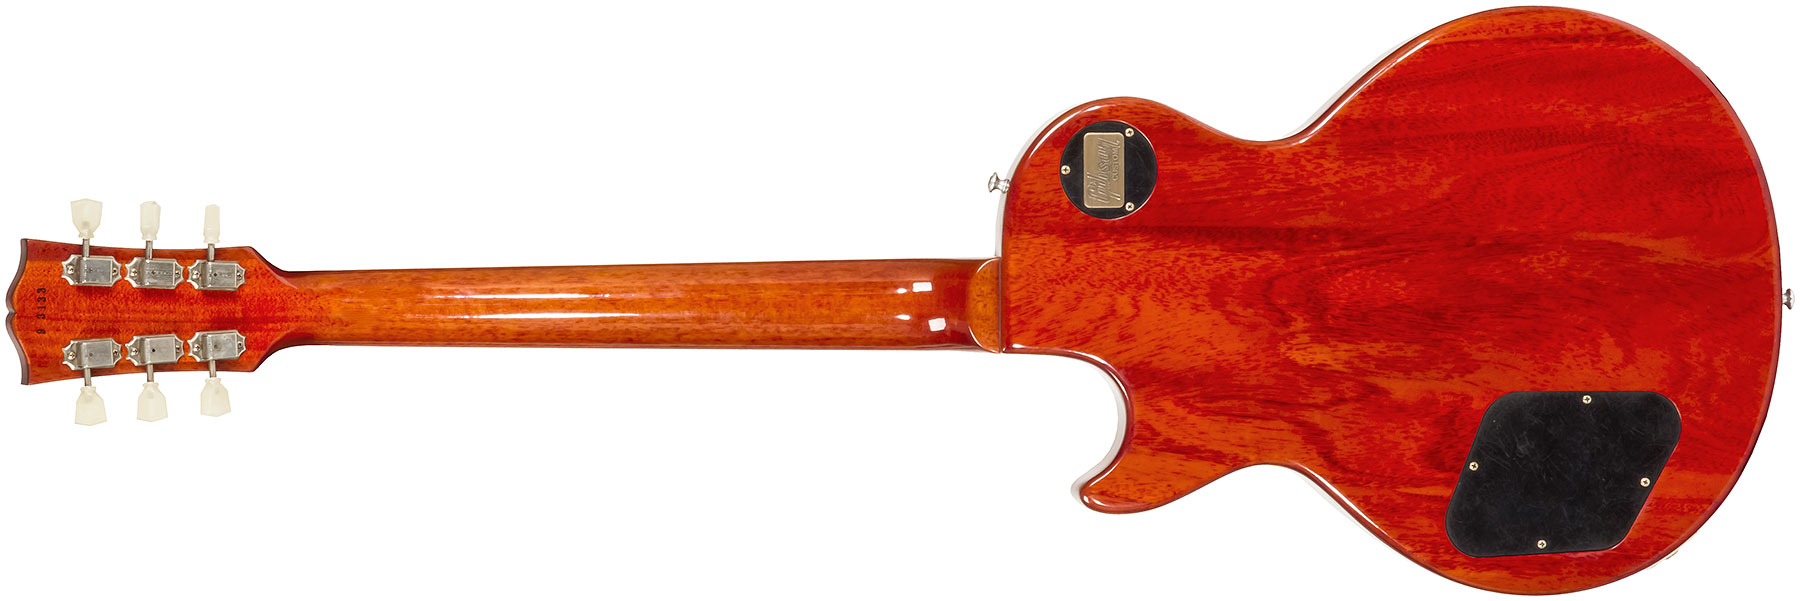 Gibson Custom Shop M2m Les Paul Standard 1959 2h Ht Rw #93133 - Vos Amber Burst - Single cut electric guitar - Variation 1